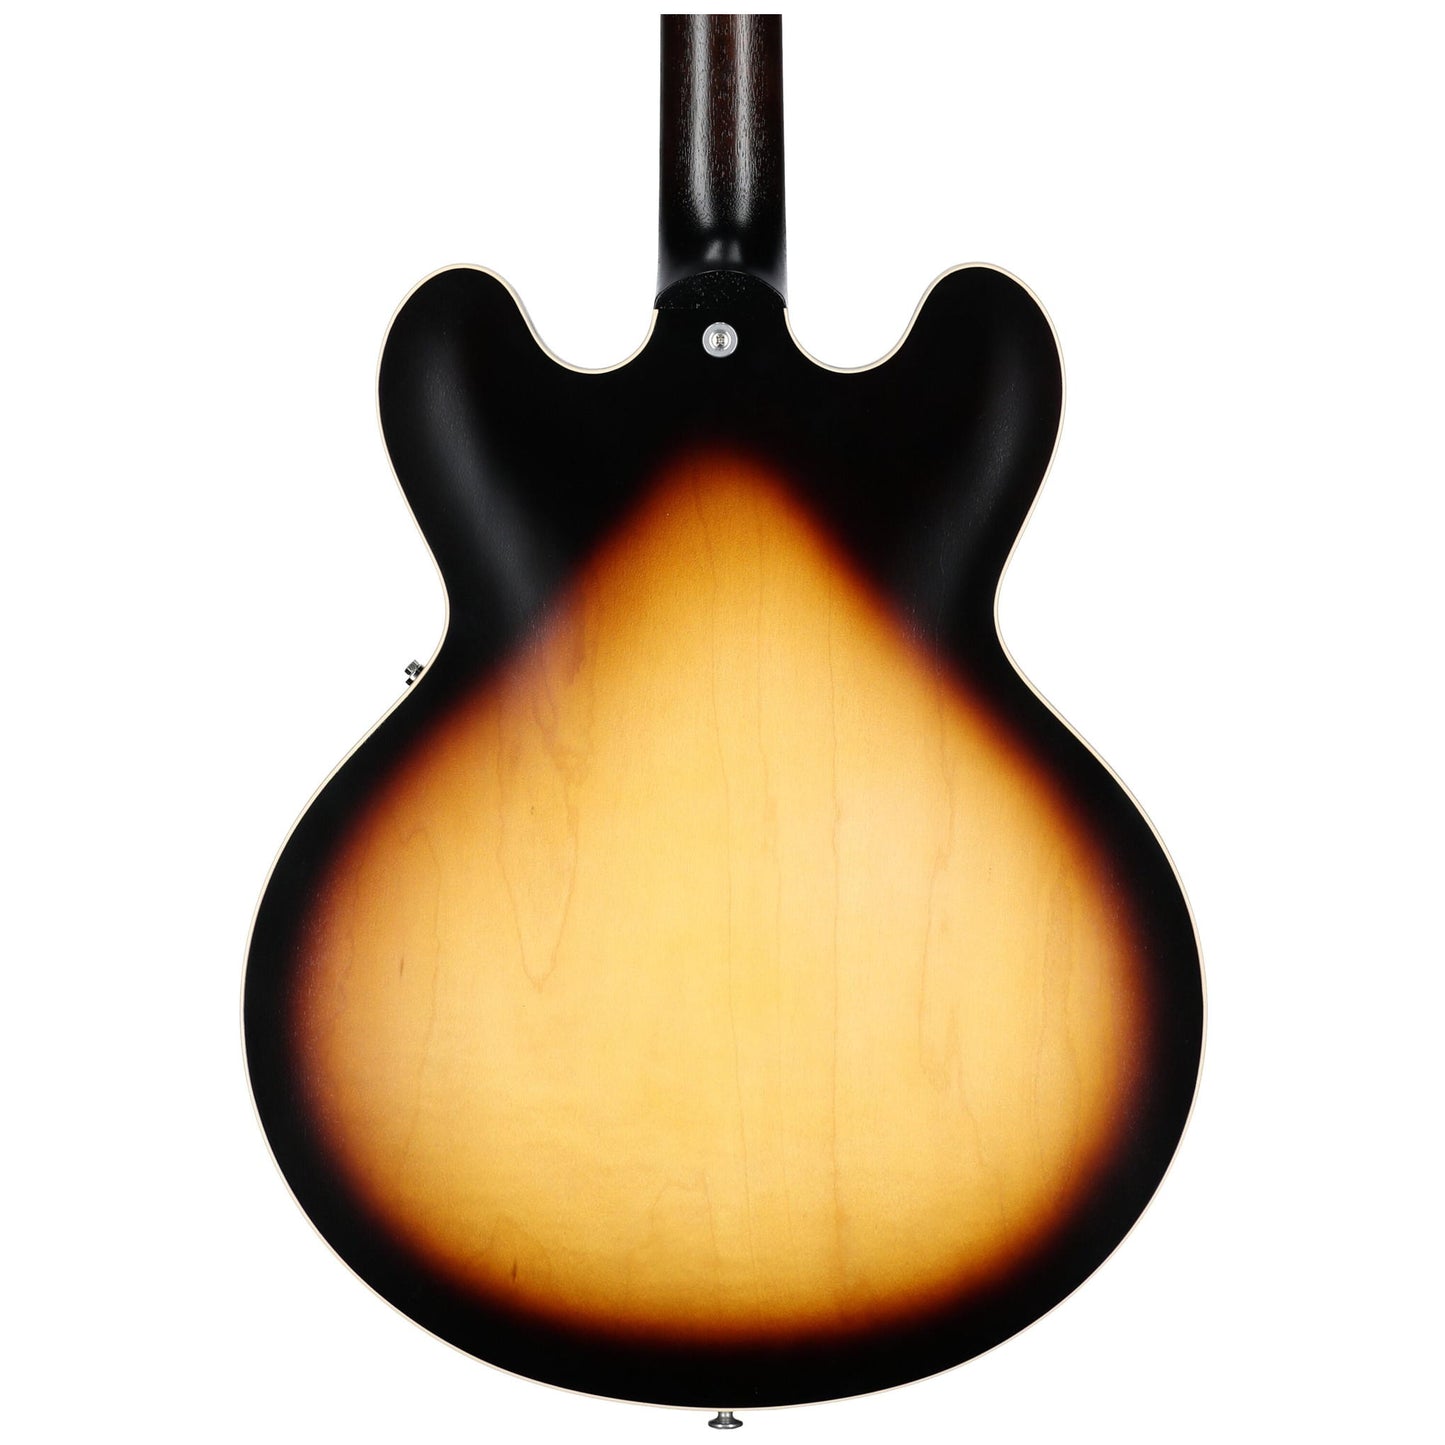 Gibson ES-335 Dot Satin Electric Guitar, Vintage Burst